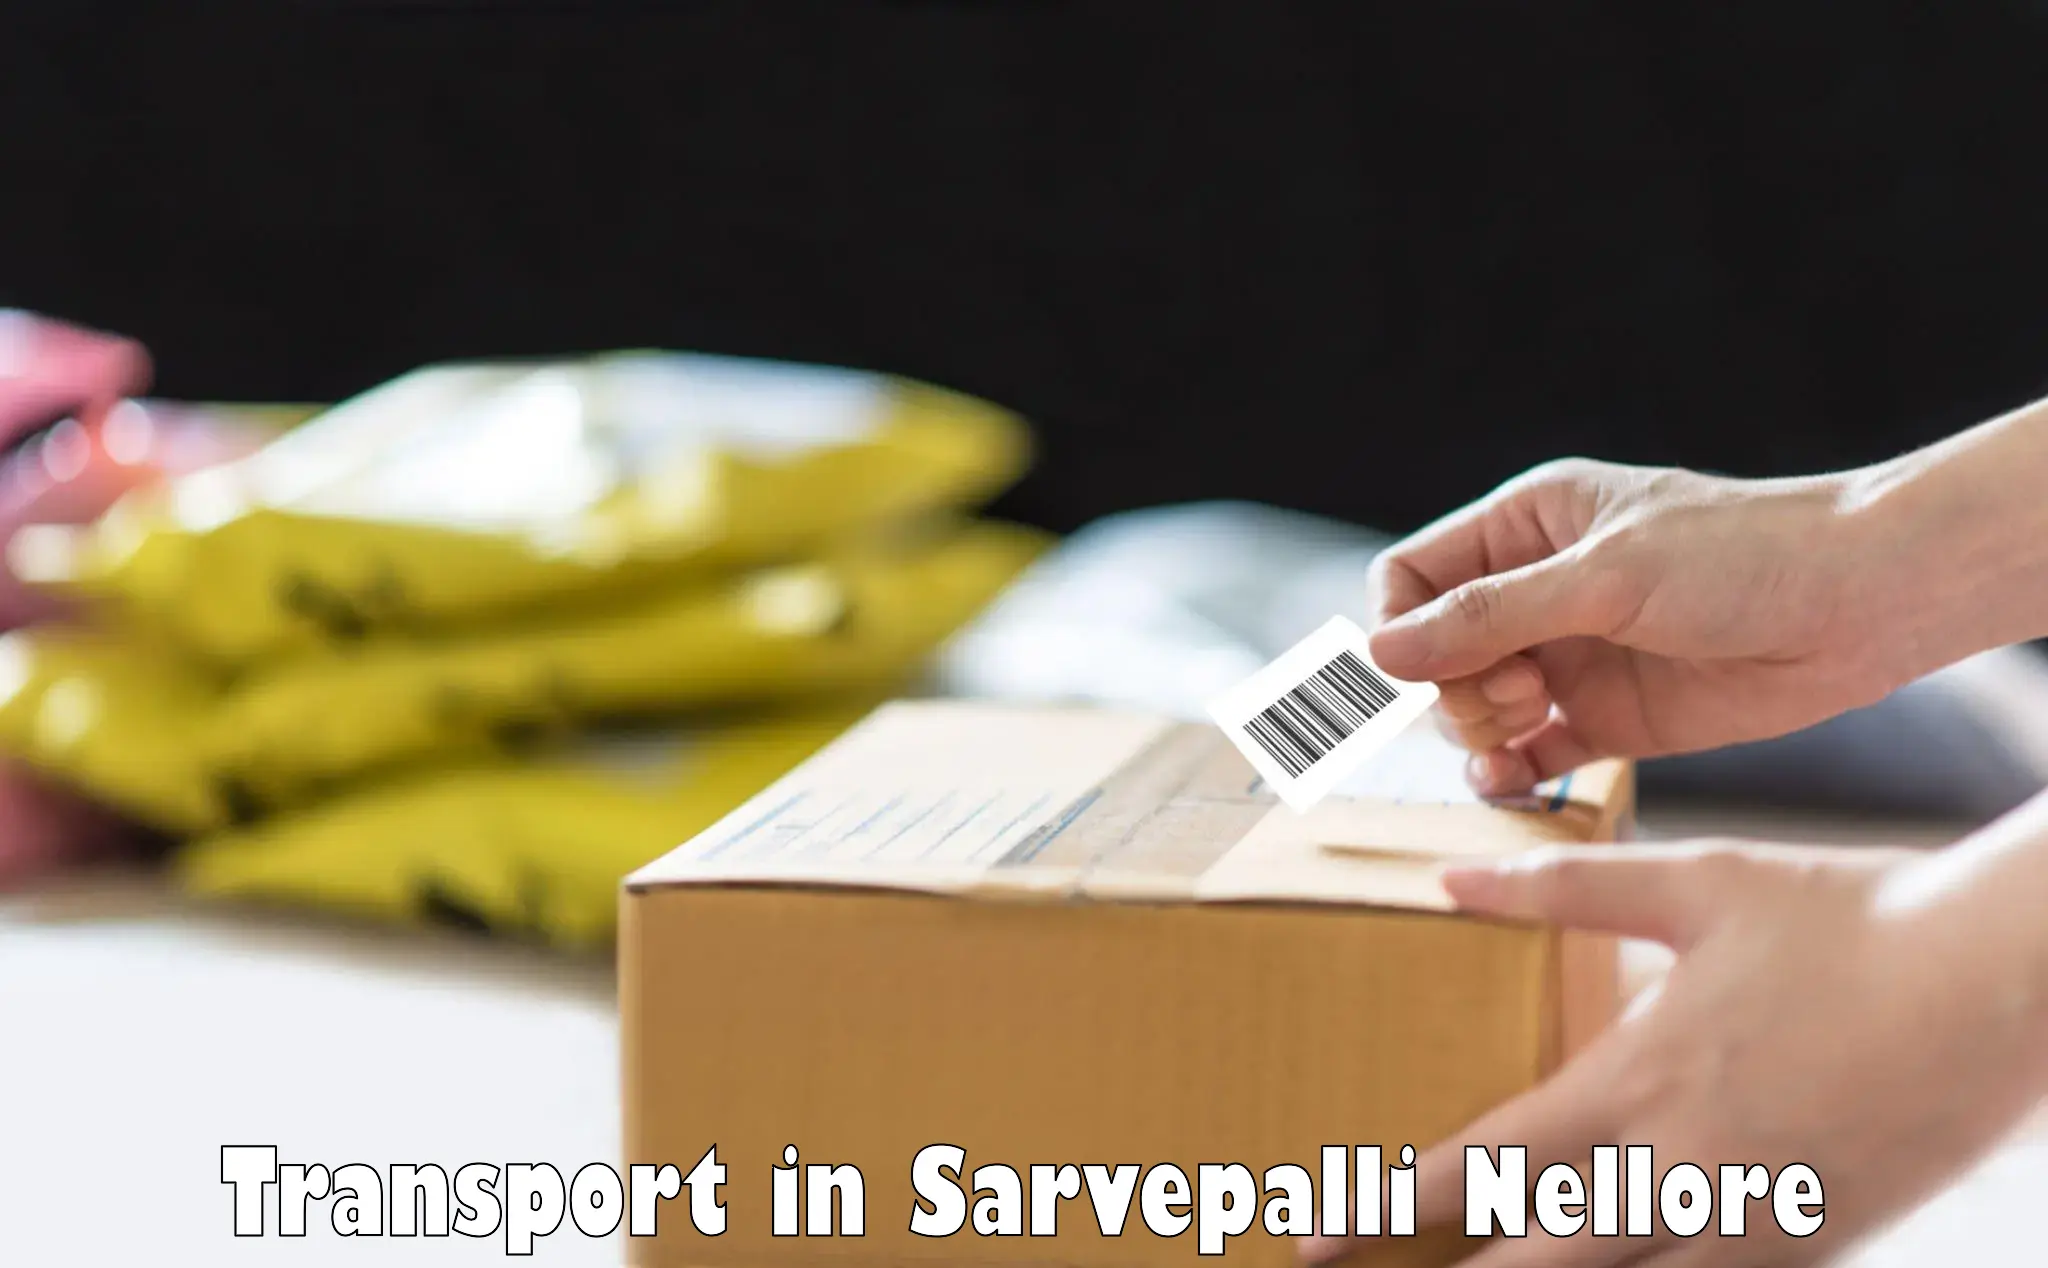 Transport shared services in Sarvepalli Nellore